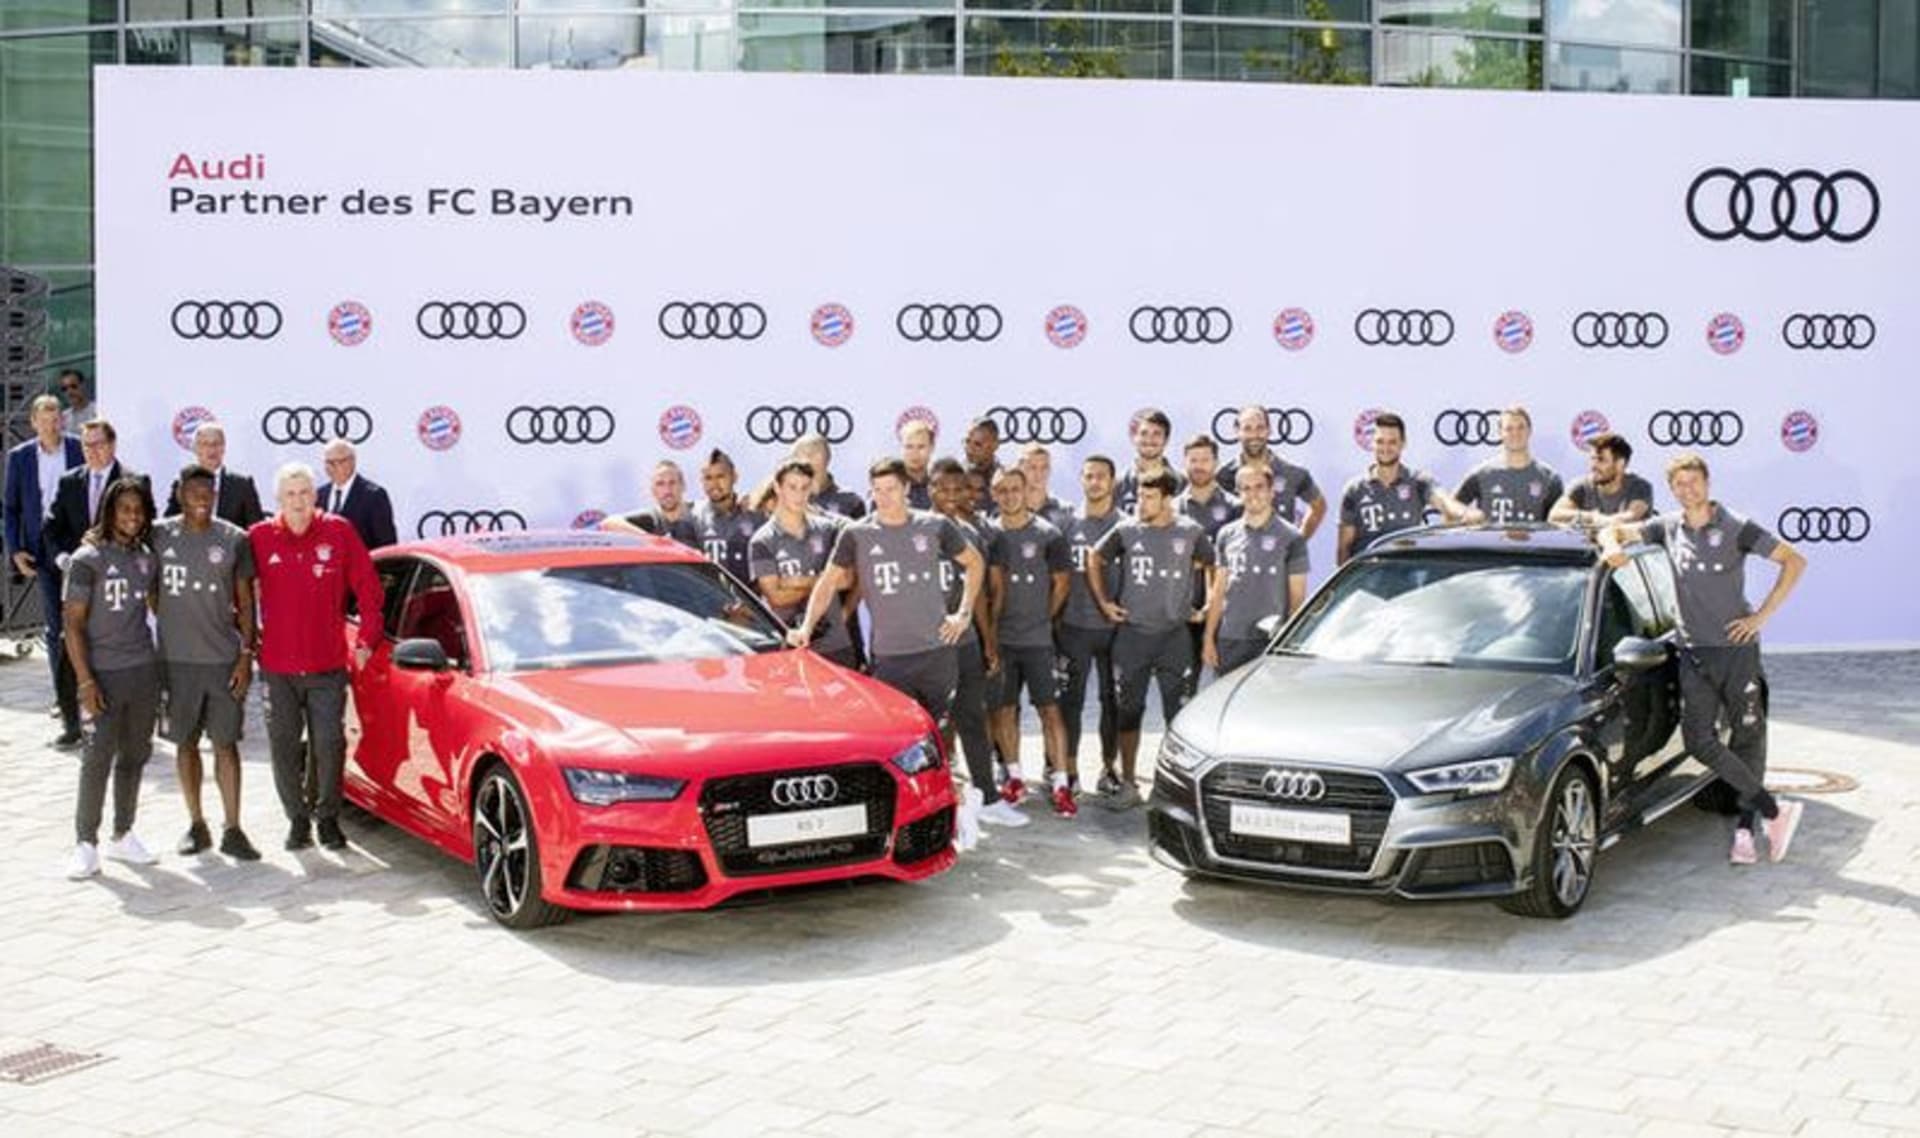 Fotbalisté si mohli vybrat jakékoliv Audi